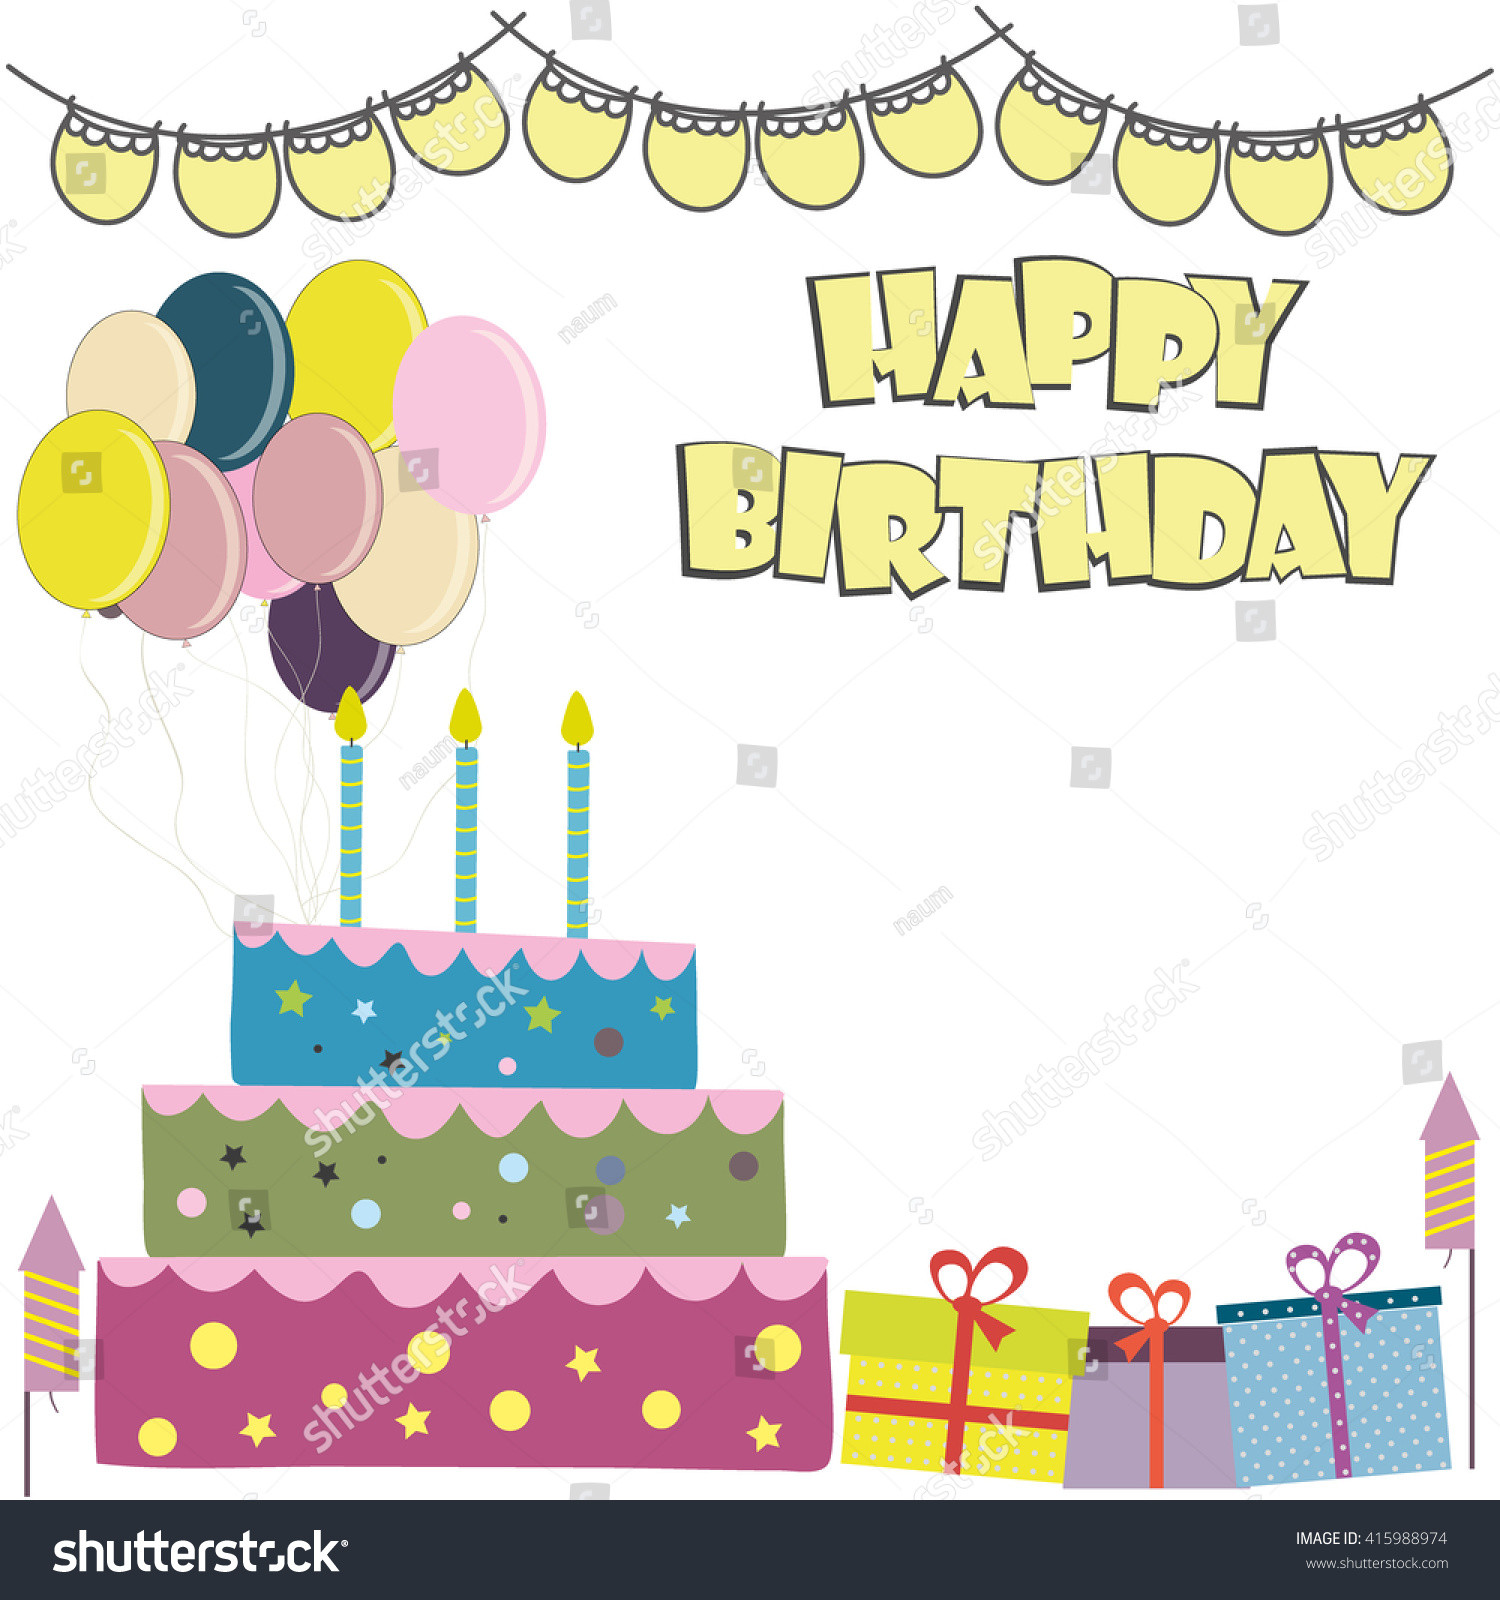 Happy Birthday Cake Text
 Happy Birthday Card Birthday Cakeplace Text Stock Vector